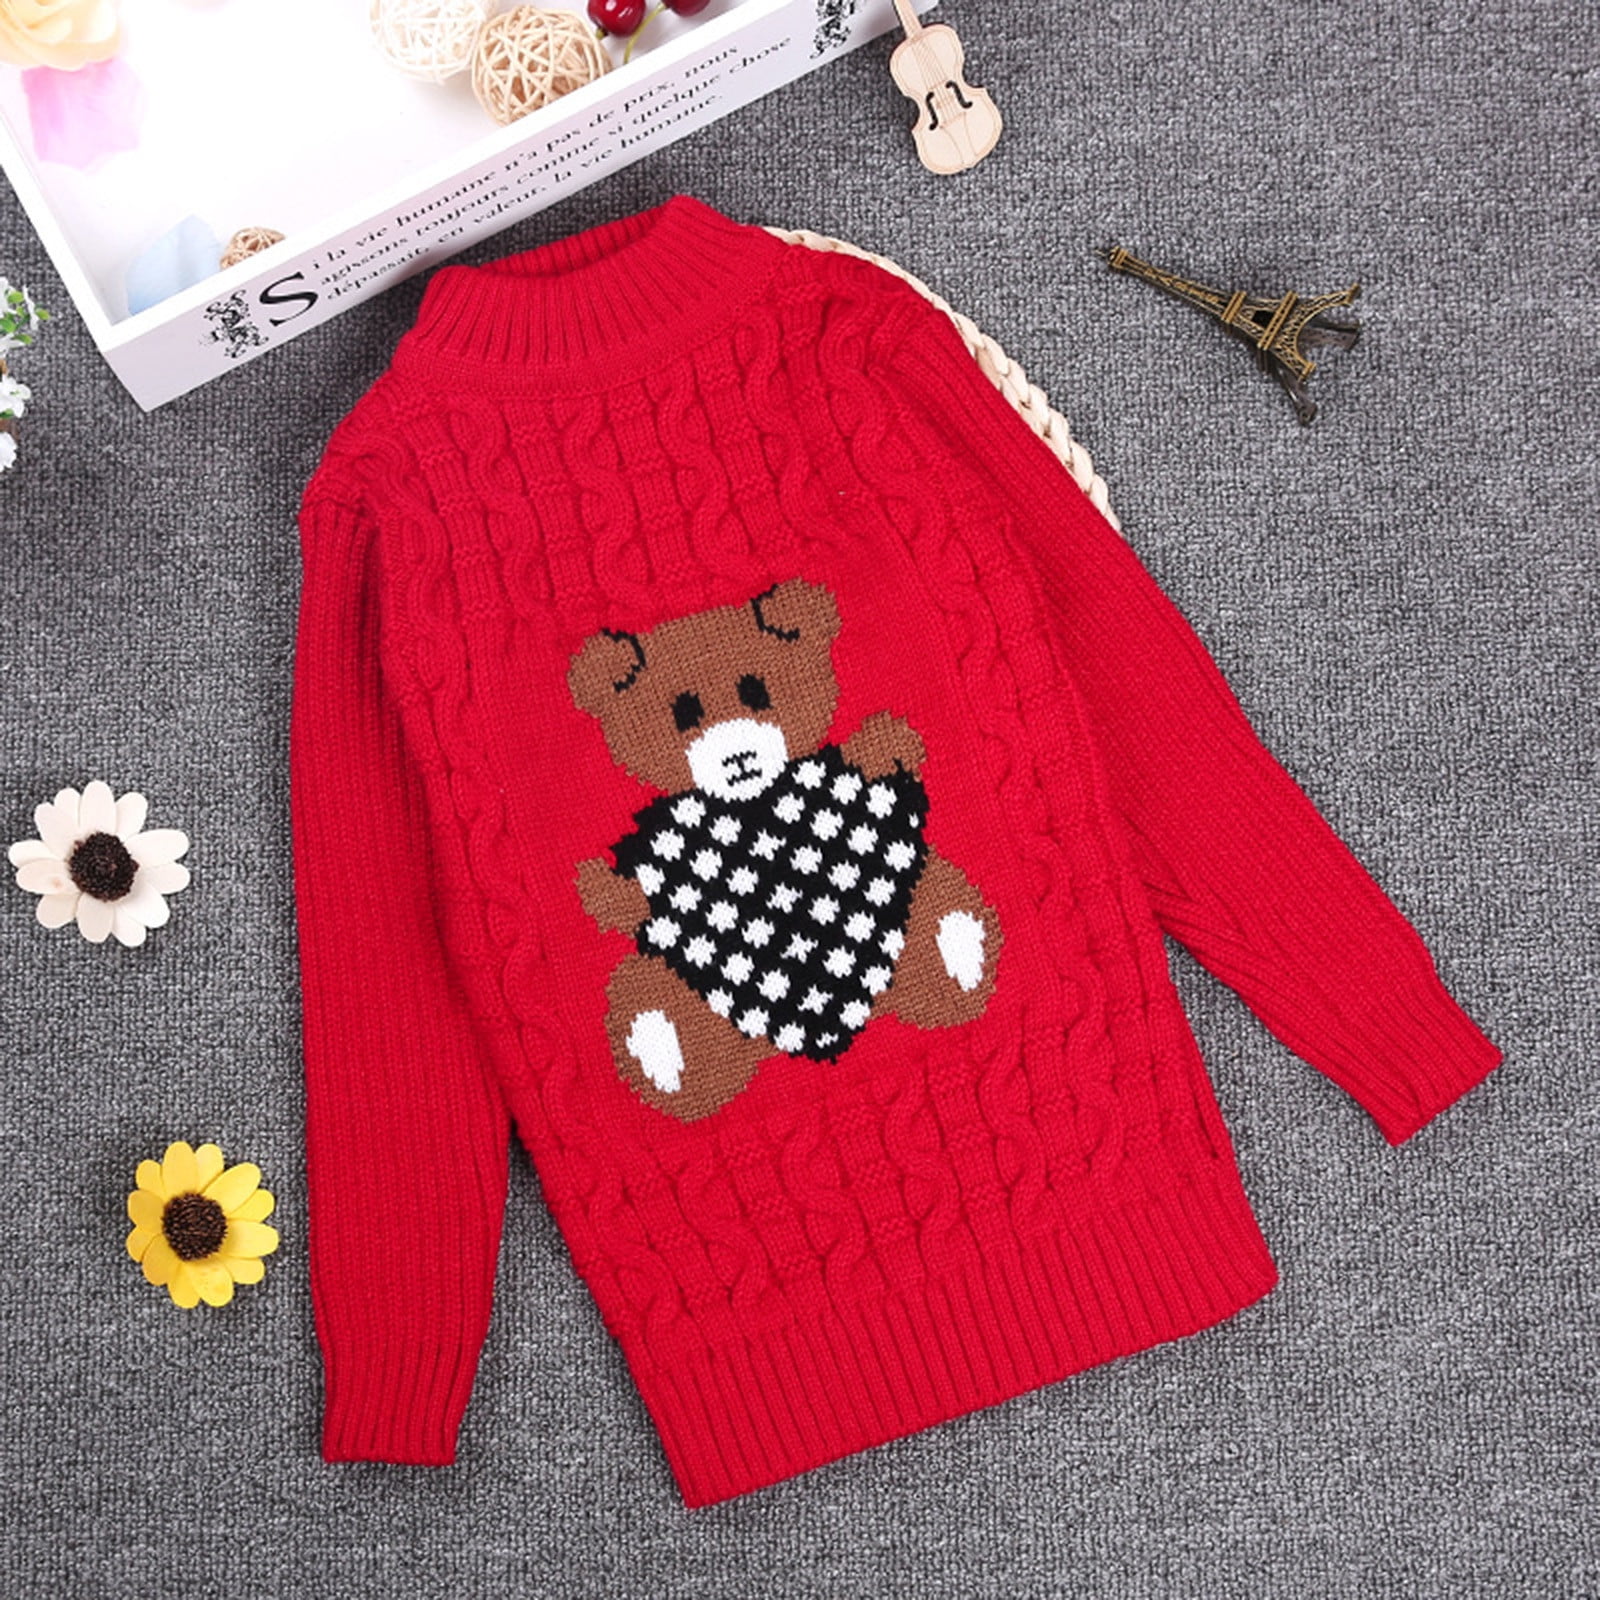 BTJX Toddler Kids Baby Girls Solid Cartoon Print Knit Pullover Sweater  Crochet Tops 